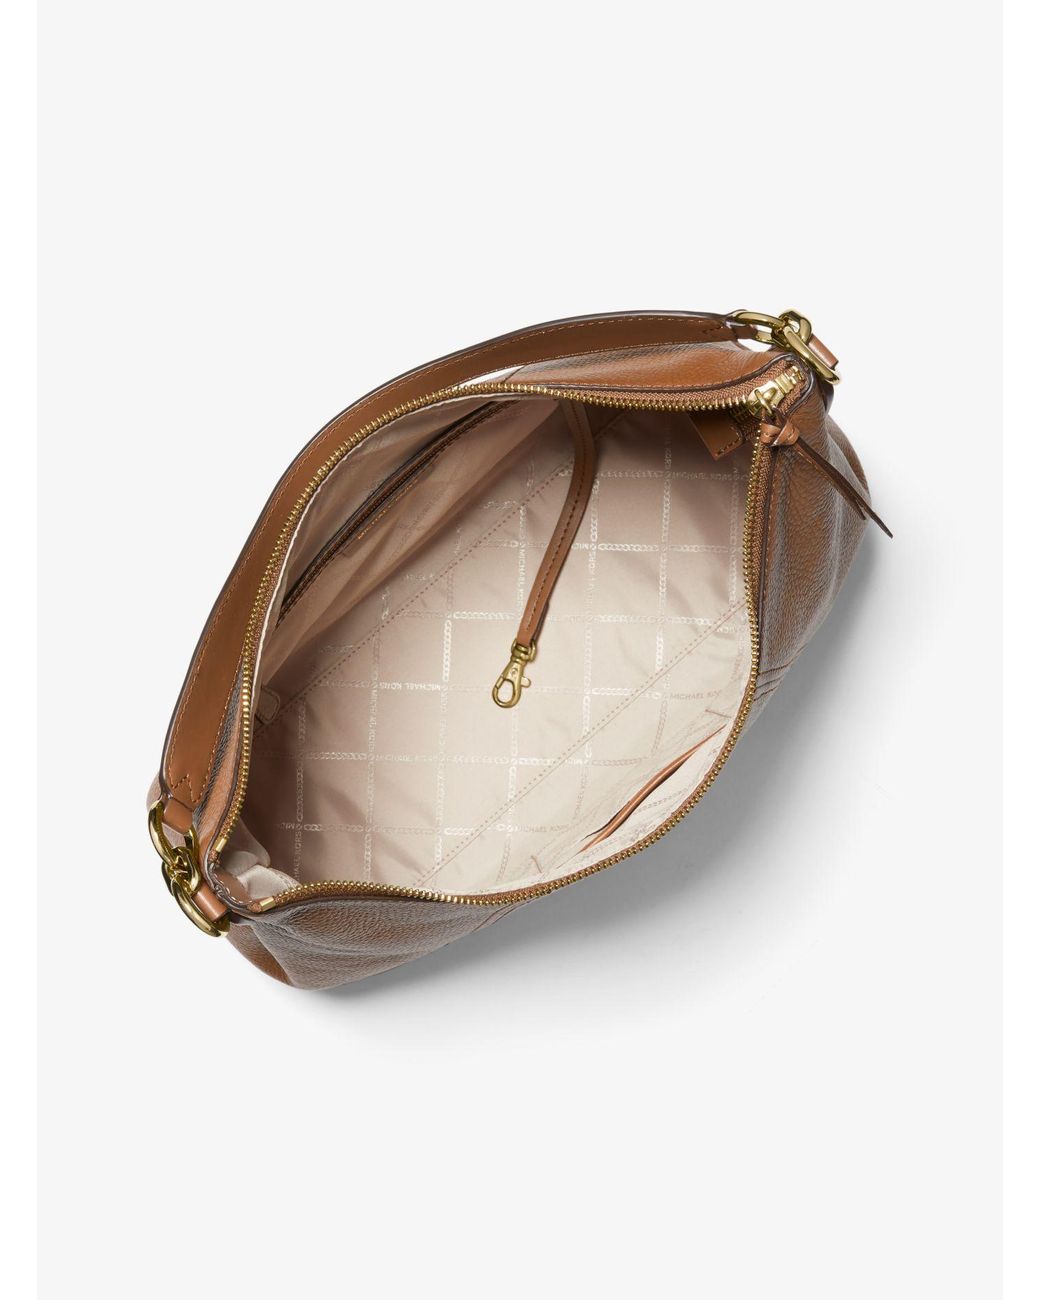 Michael Kors Sienna Large Pebbled Leather Shoulder Bag in Brown | Lyst